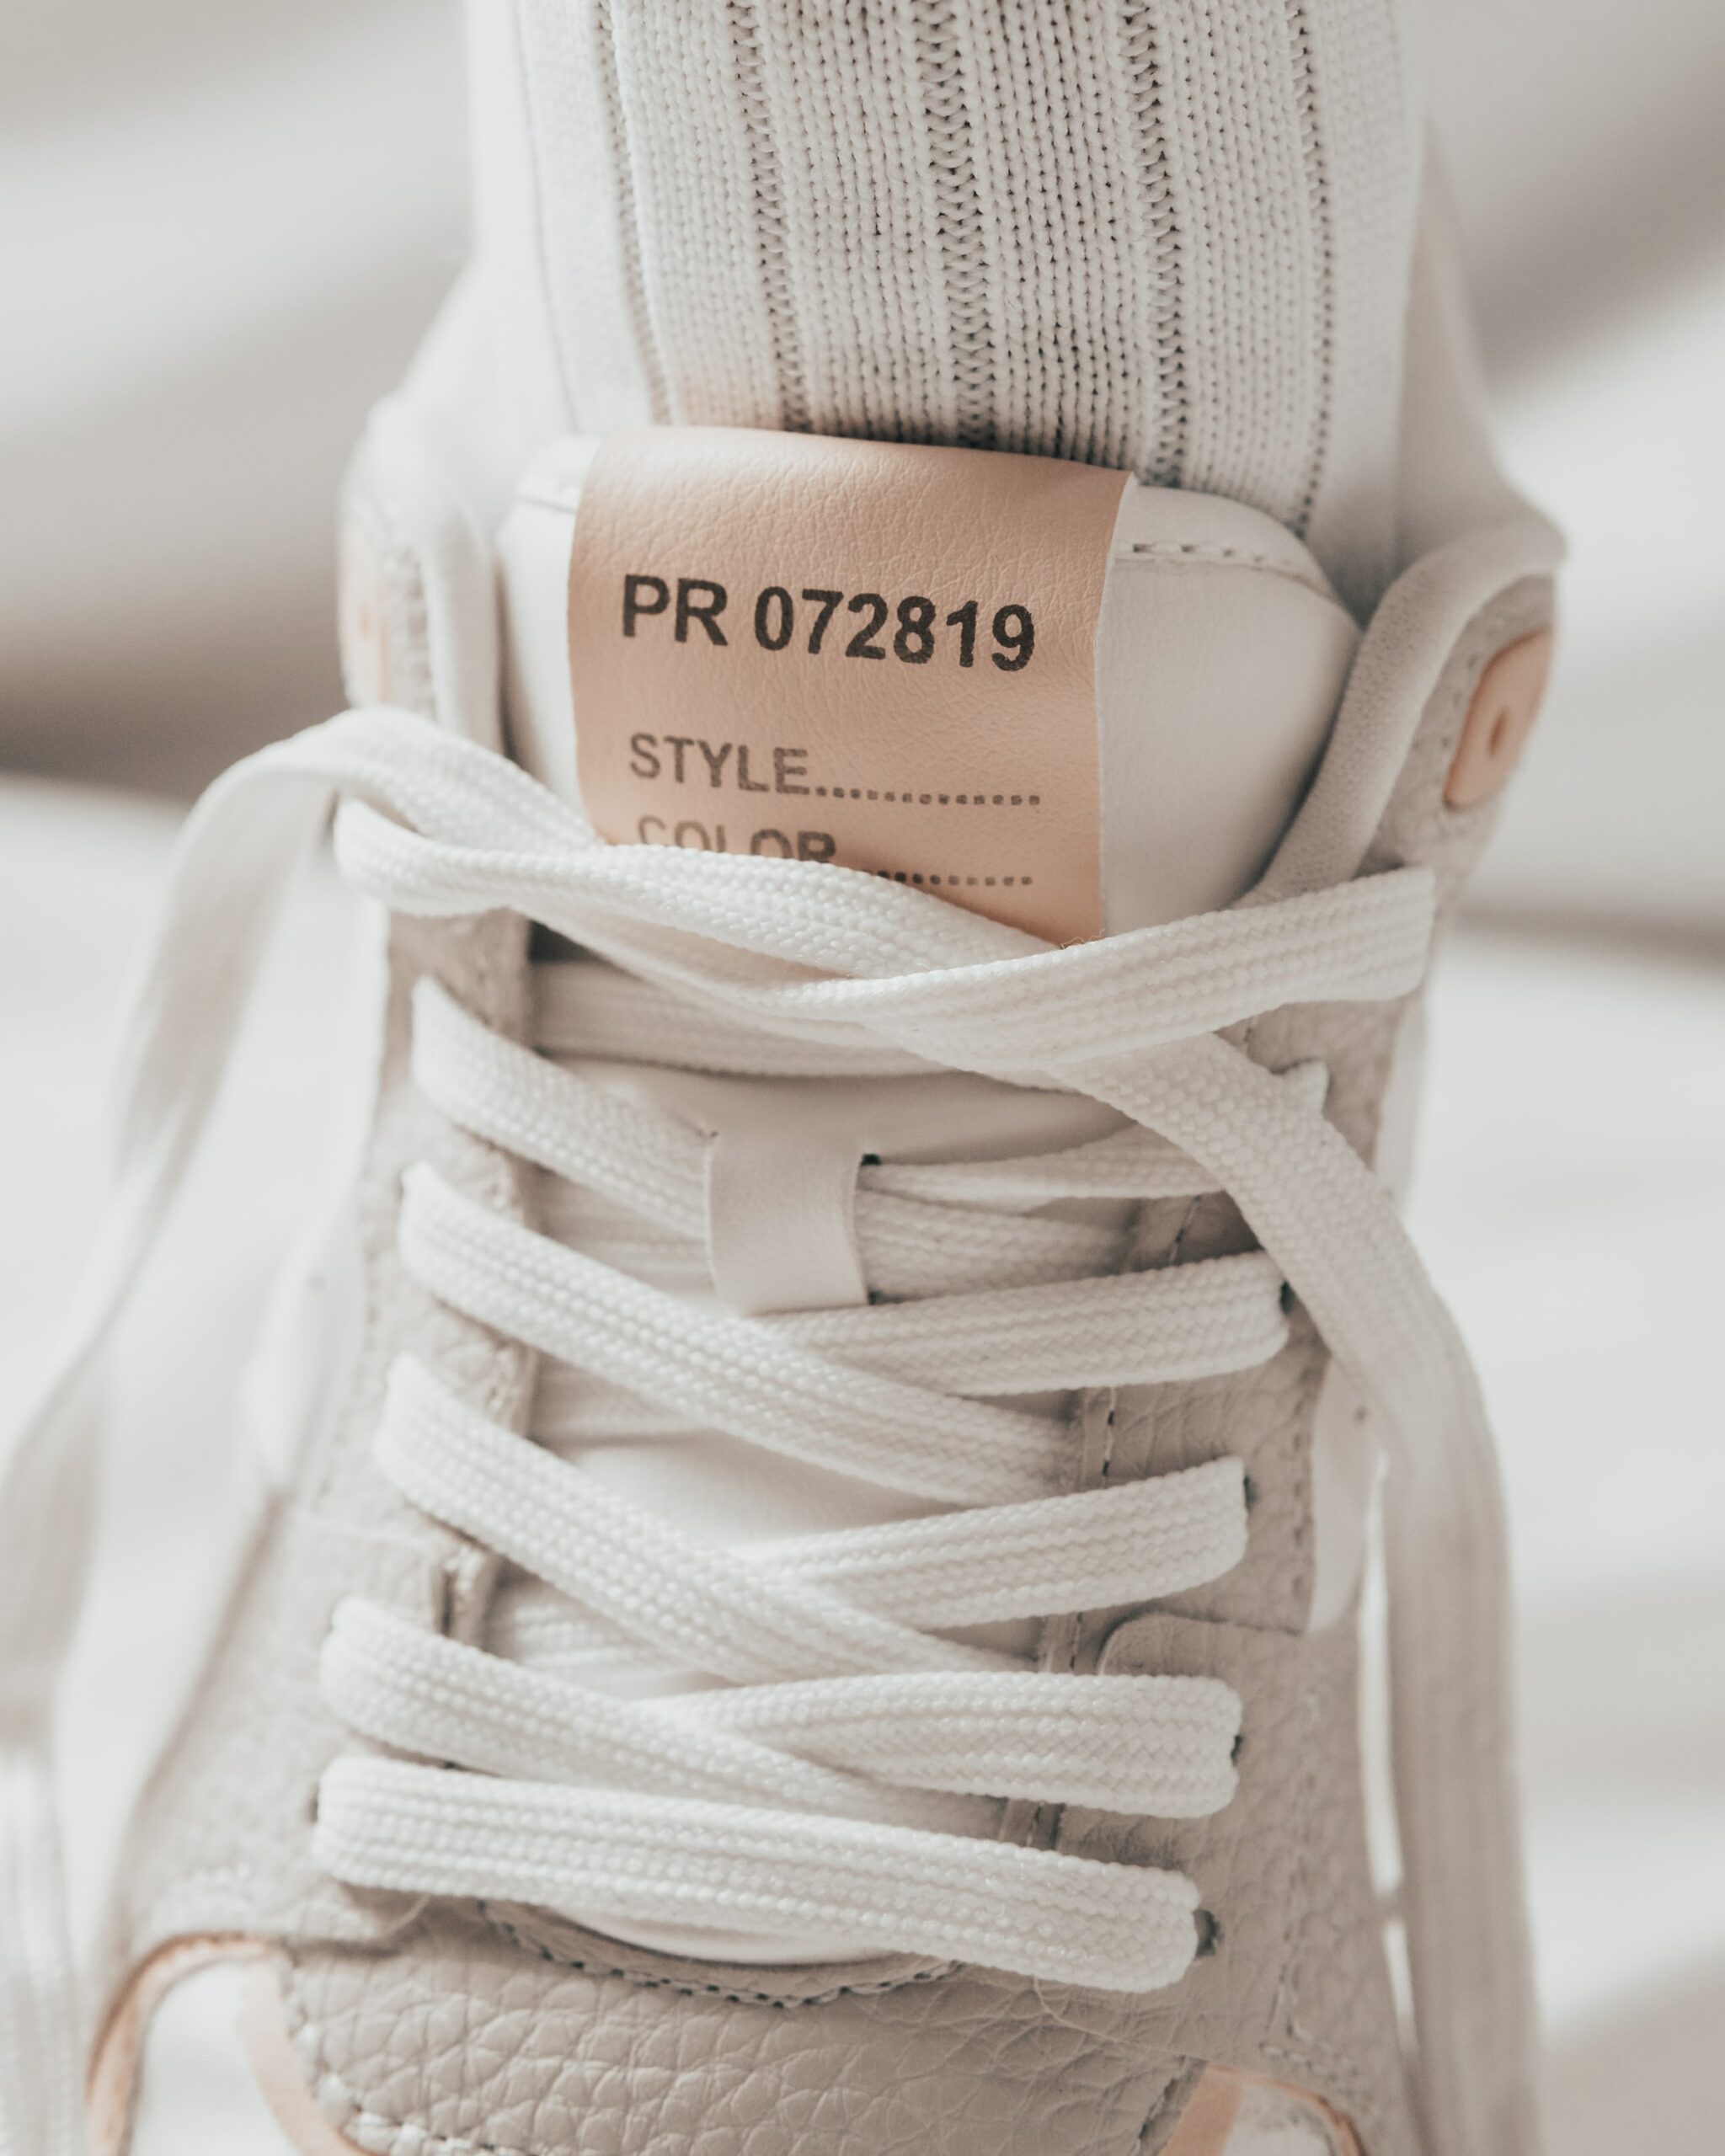 Legitimacy of  Sneaker Authentication